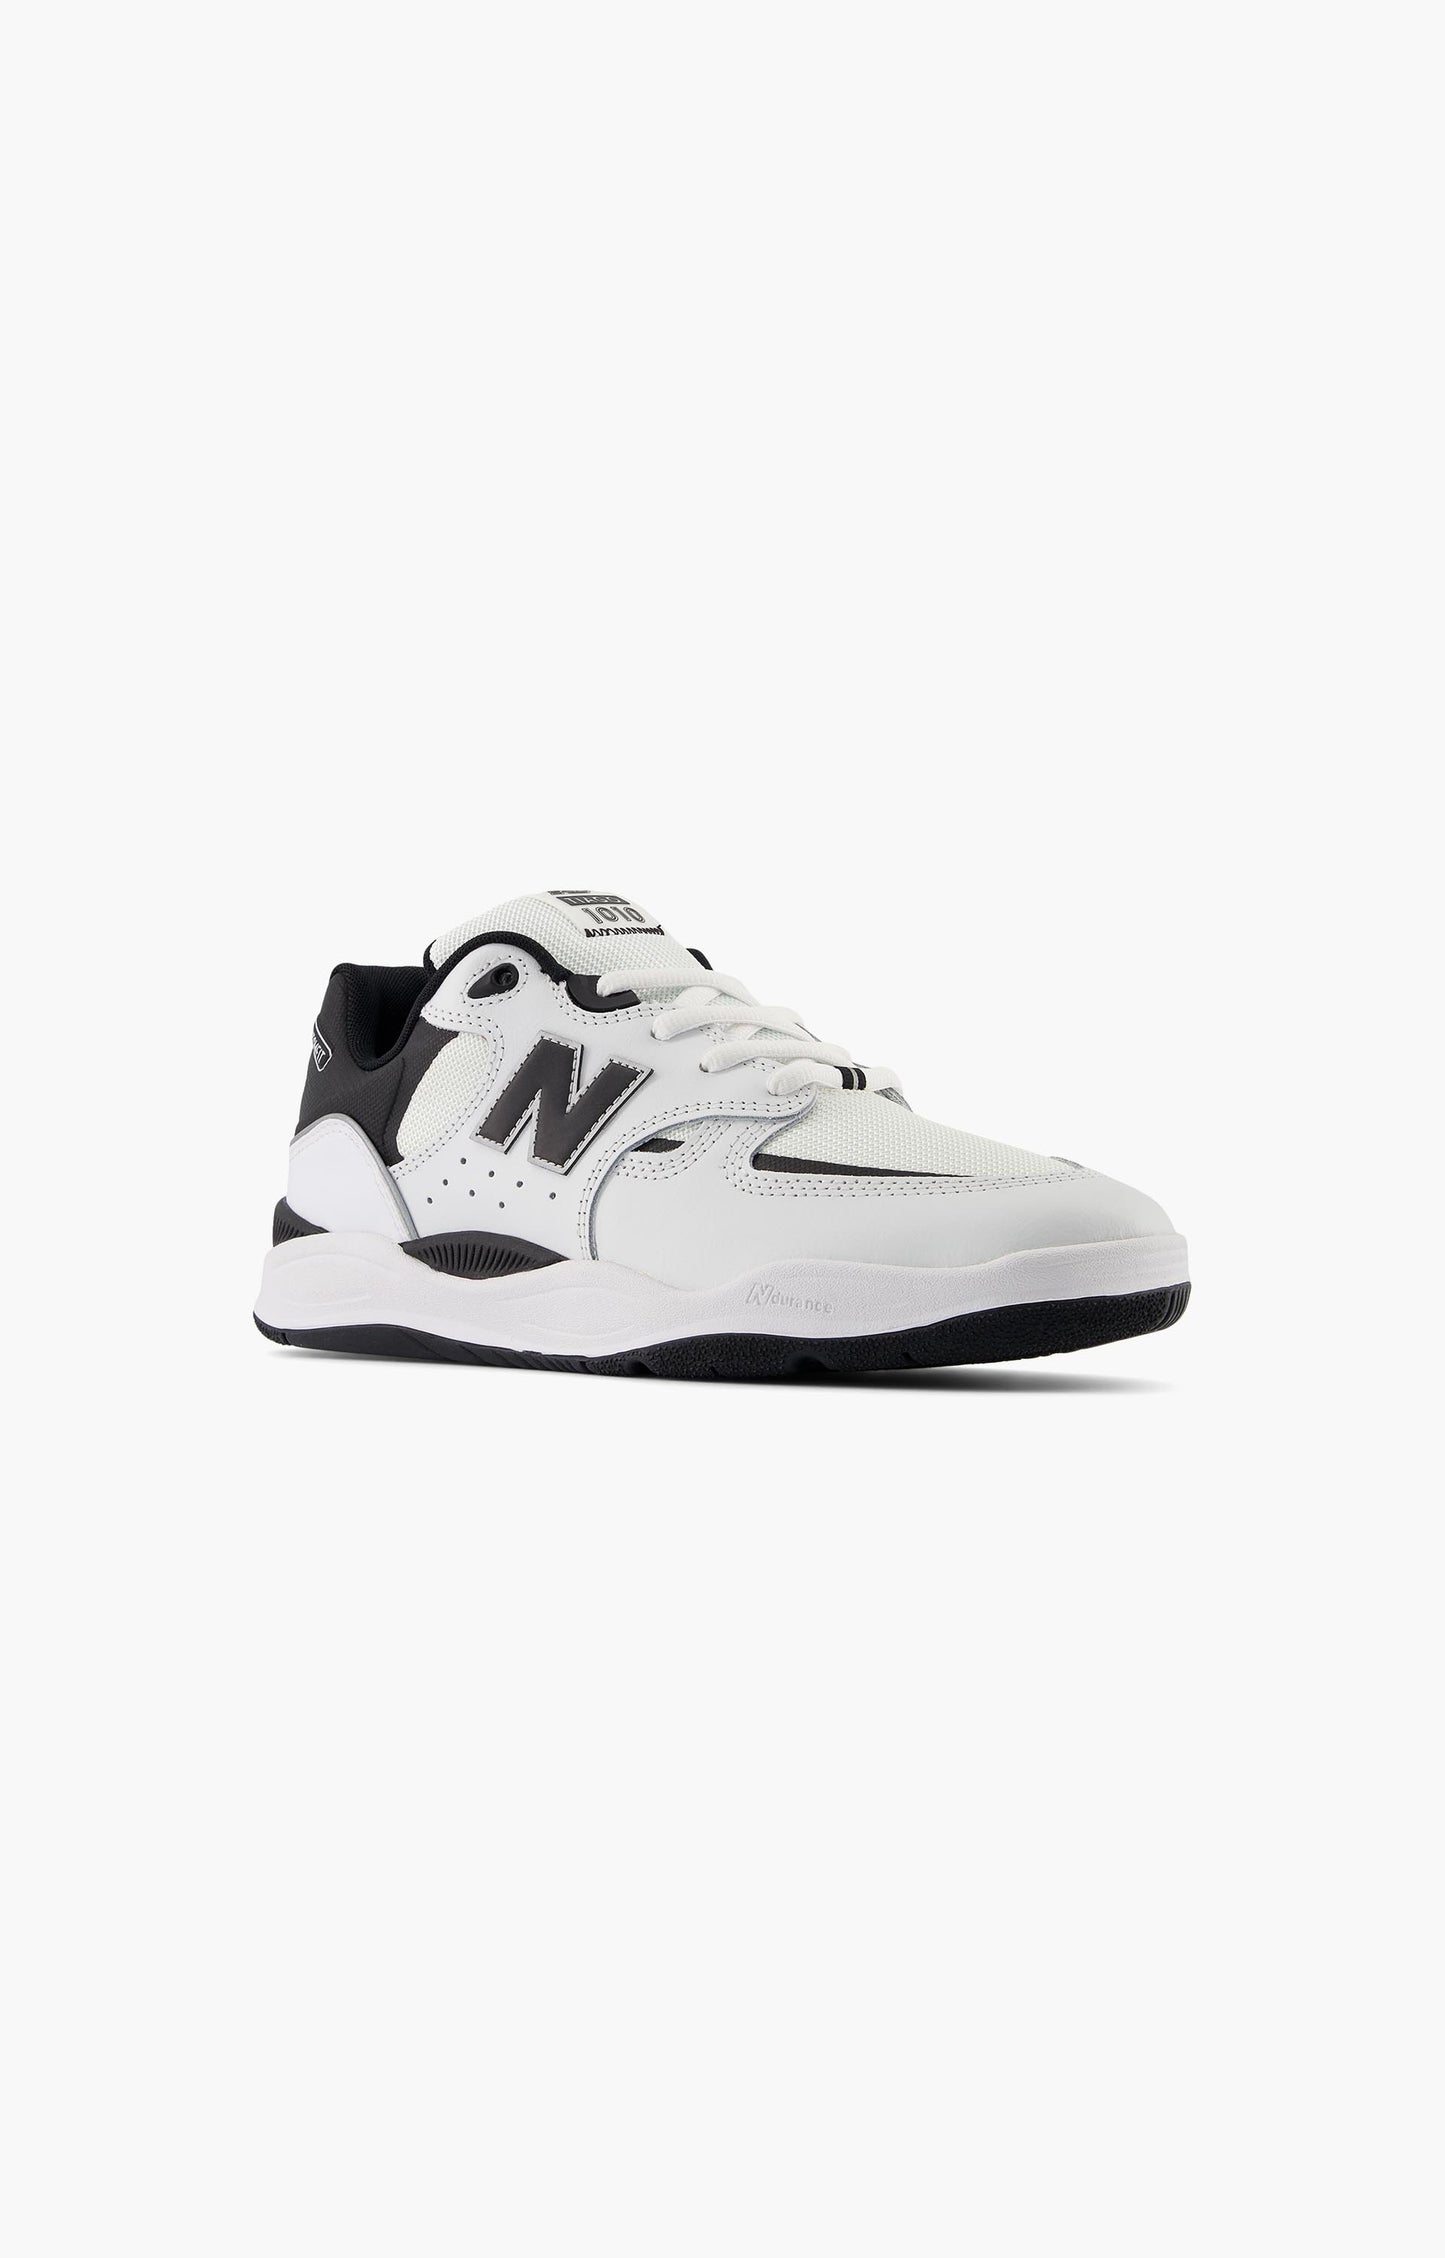 New Balance Numeric NM1010WB Shoe, White/Black